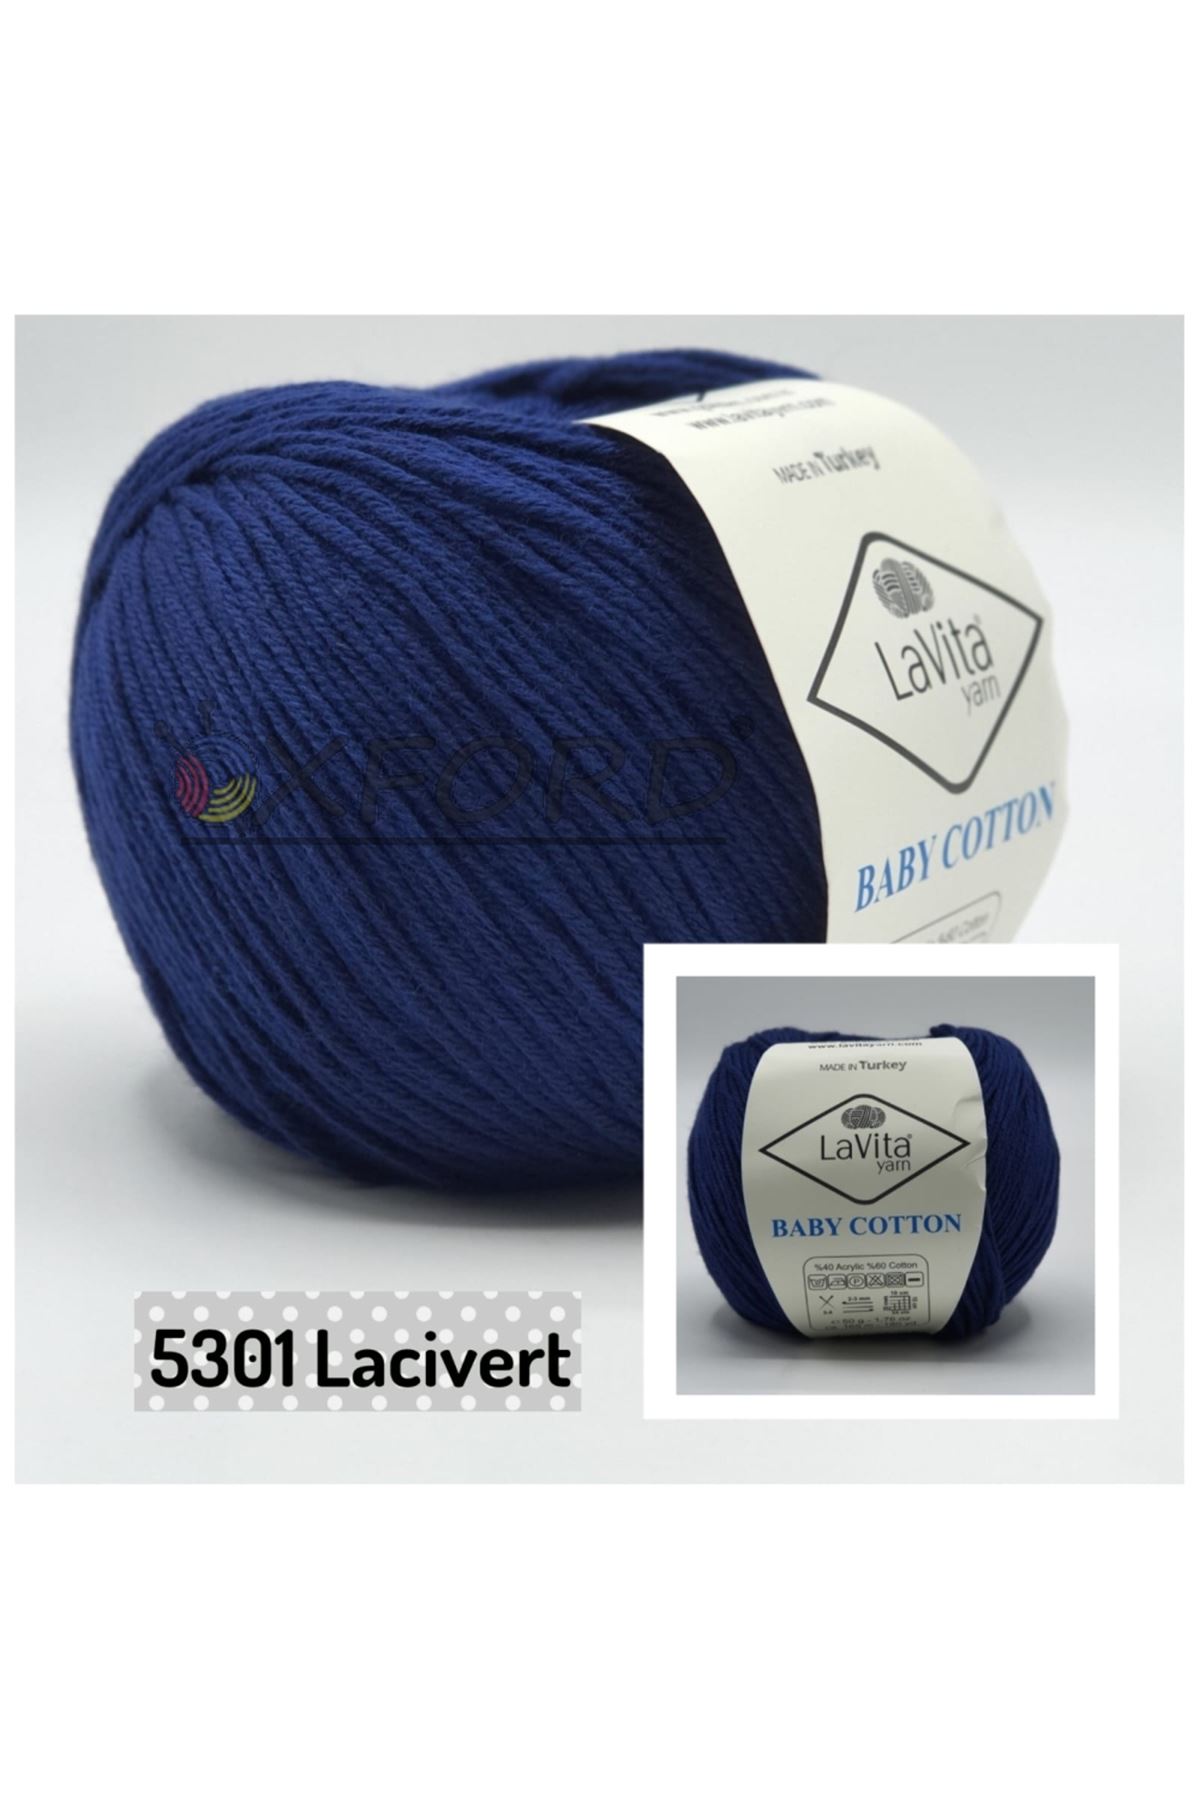 Lavita Baby Cotton 5301 Lacivert